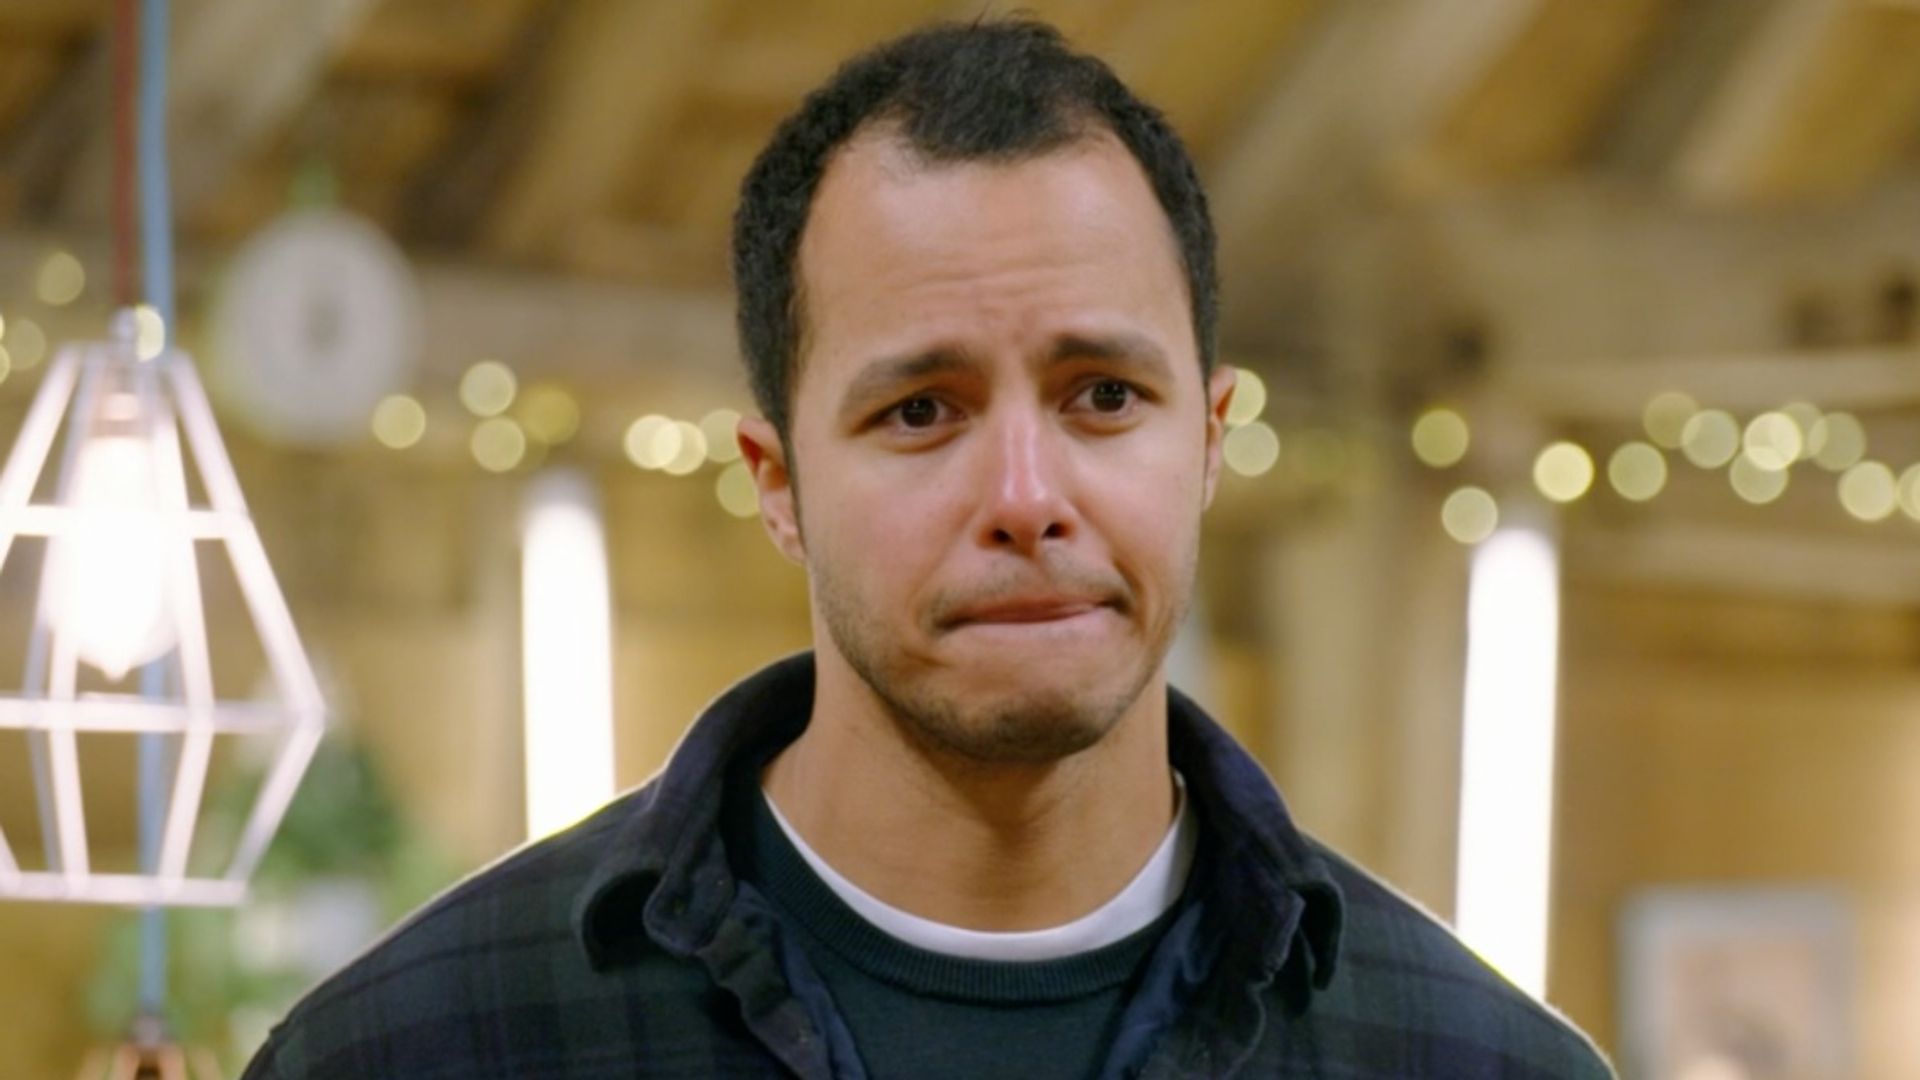 The Repair Shop viewers emotional after guest breaks down in tears in